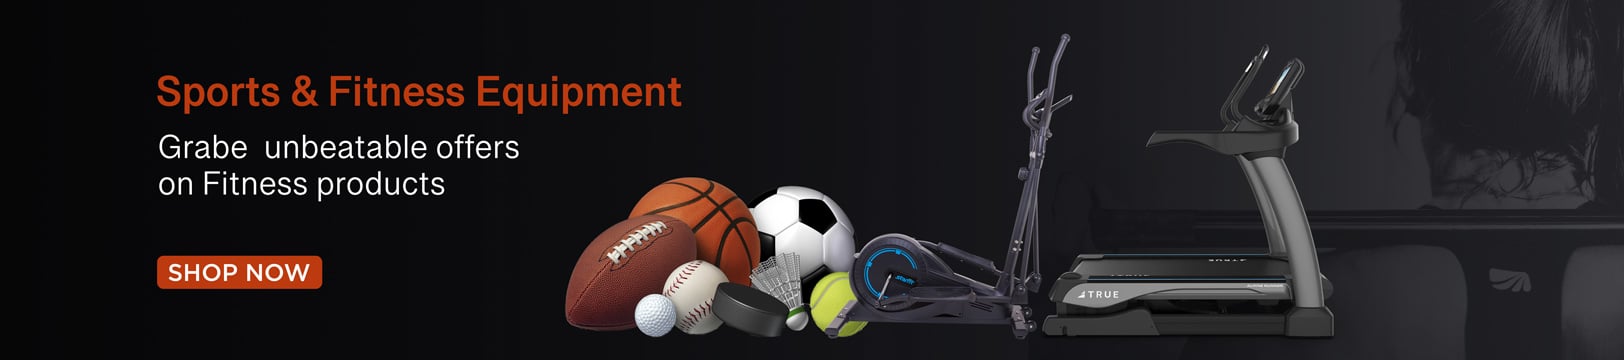 Sports & Fitness Equipment